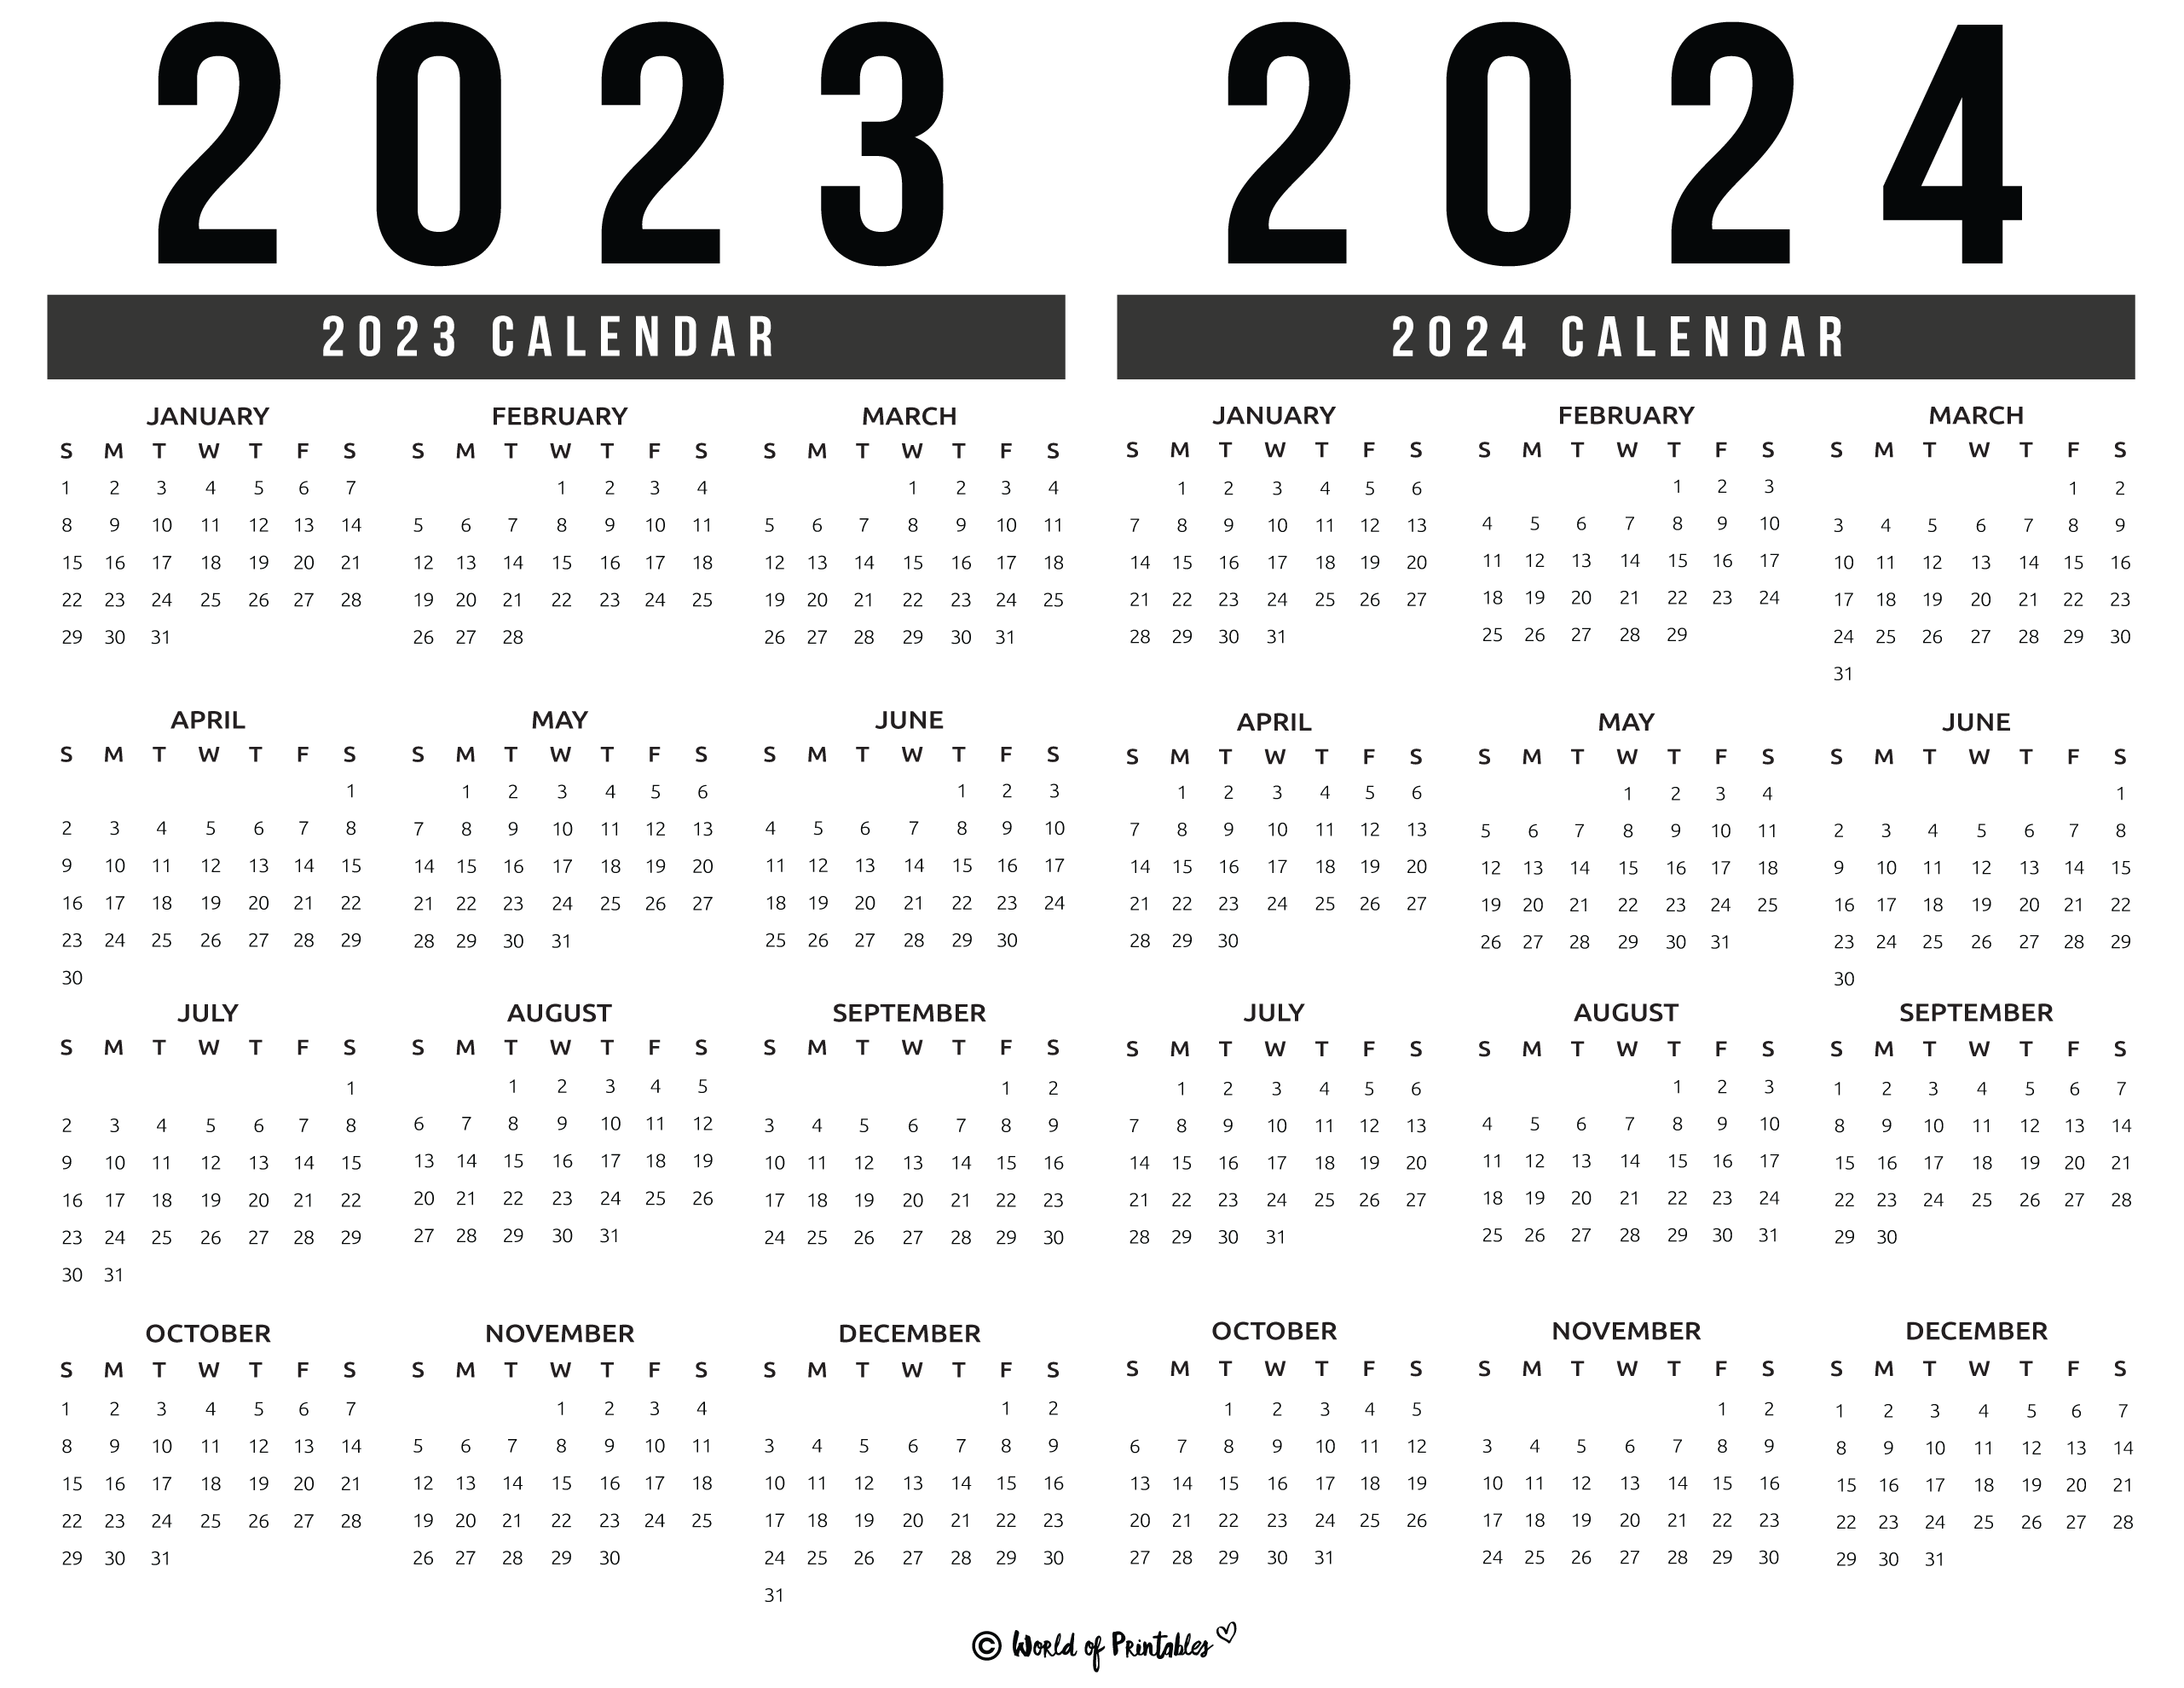 2023 2024 Calendar Free Printables - World Of Printables for 2023 Calendar 2024 Printable